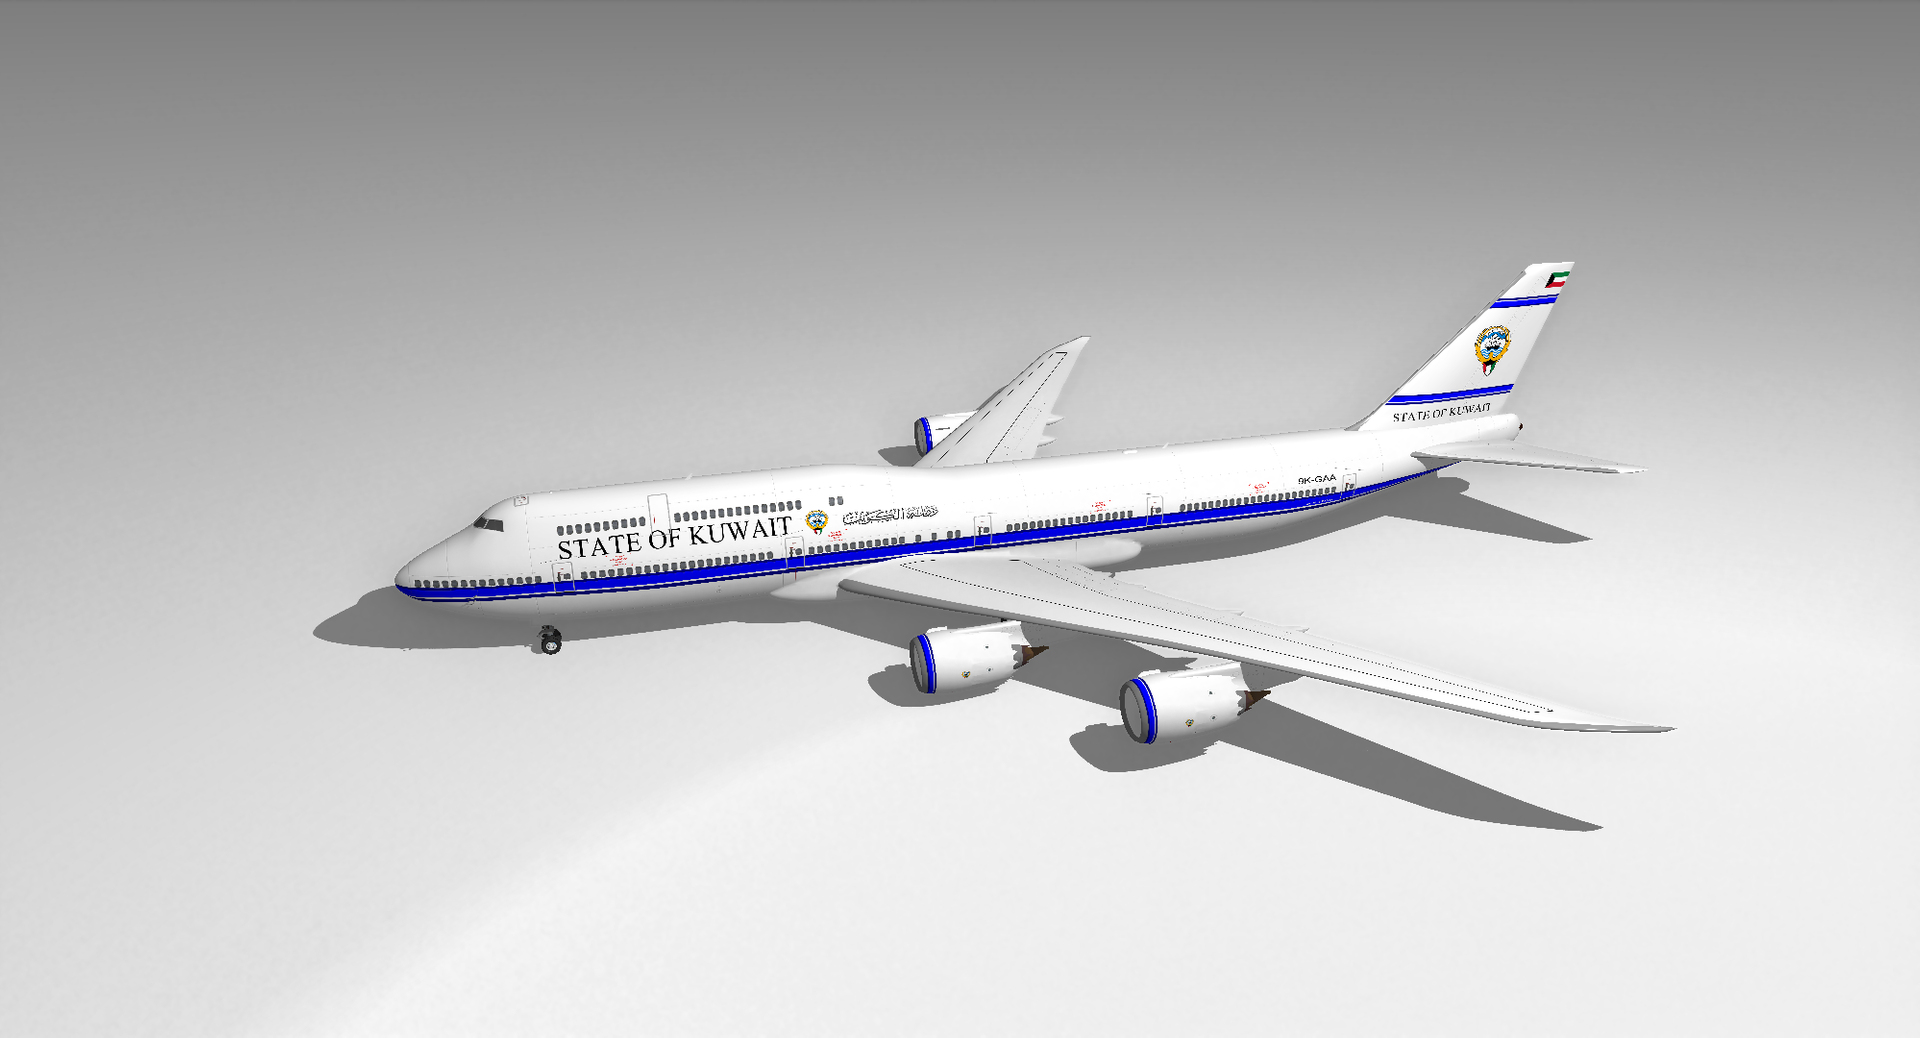 Delta Auto Plane Boeing 747-8 - stuff - Gallery - Airline Empires